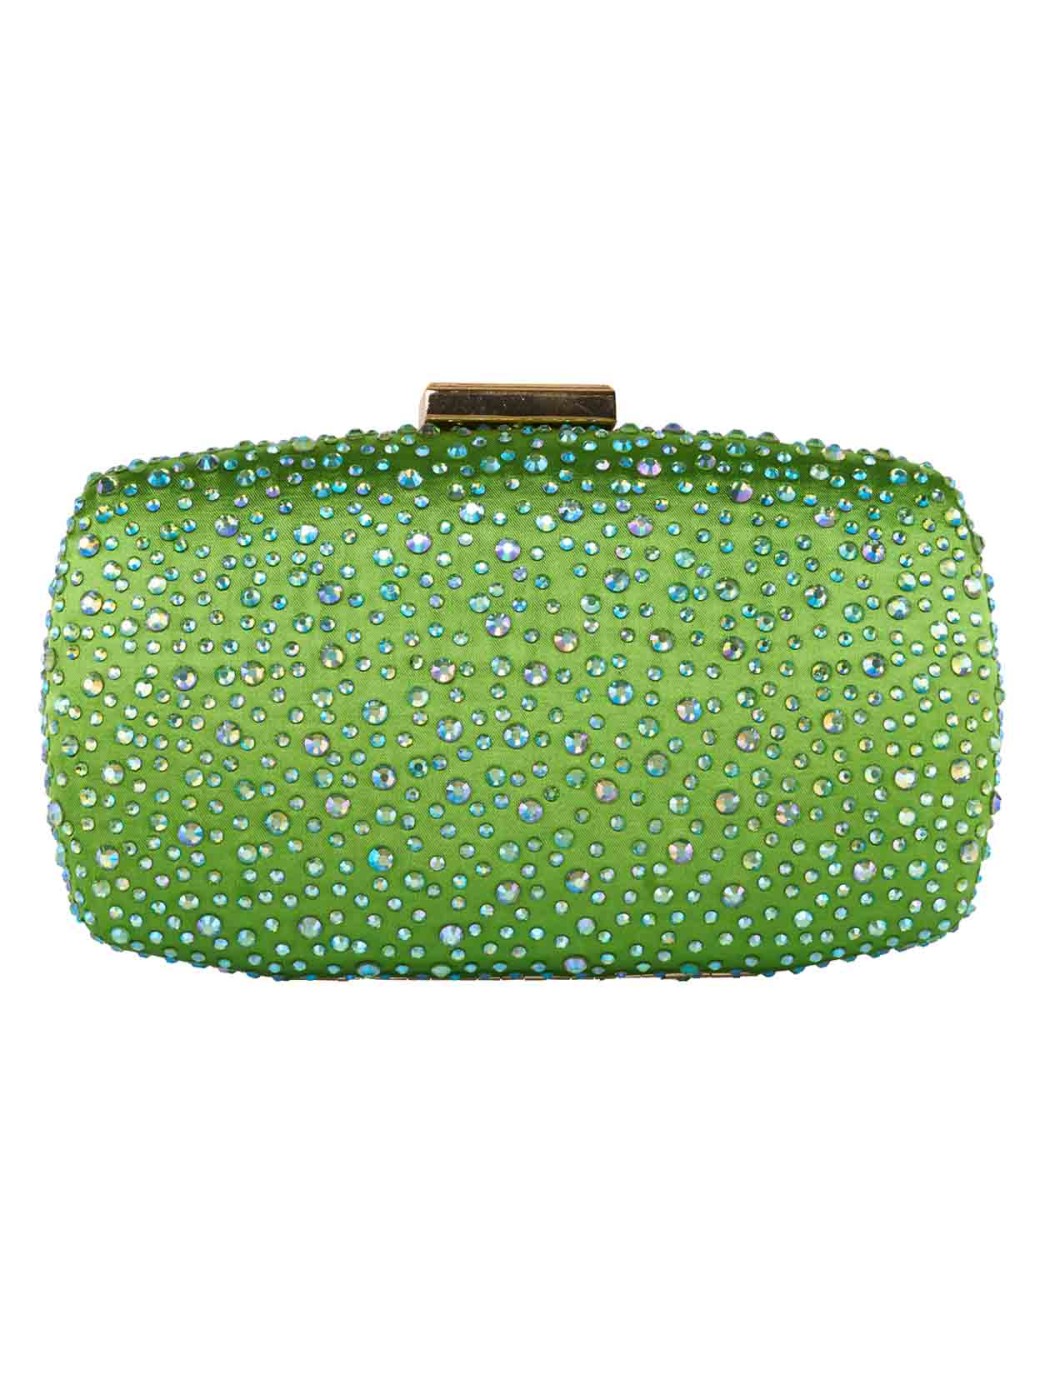 Green silk purse jewel bag...